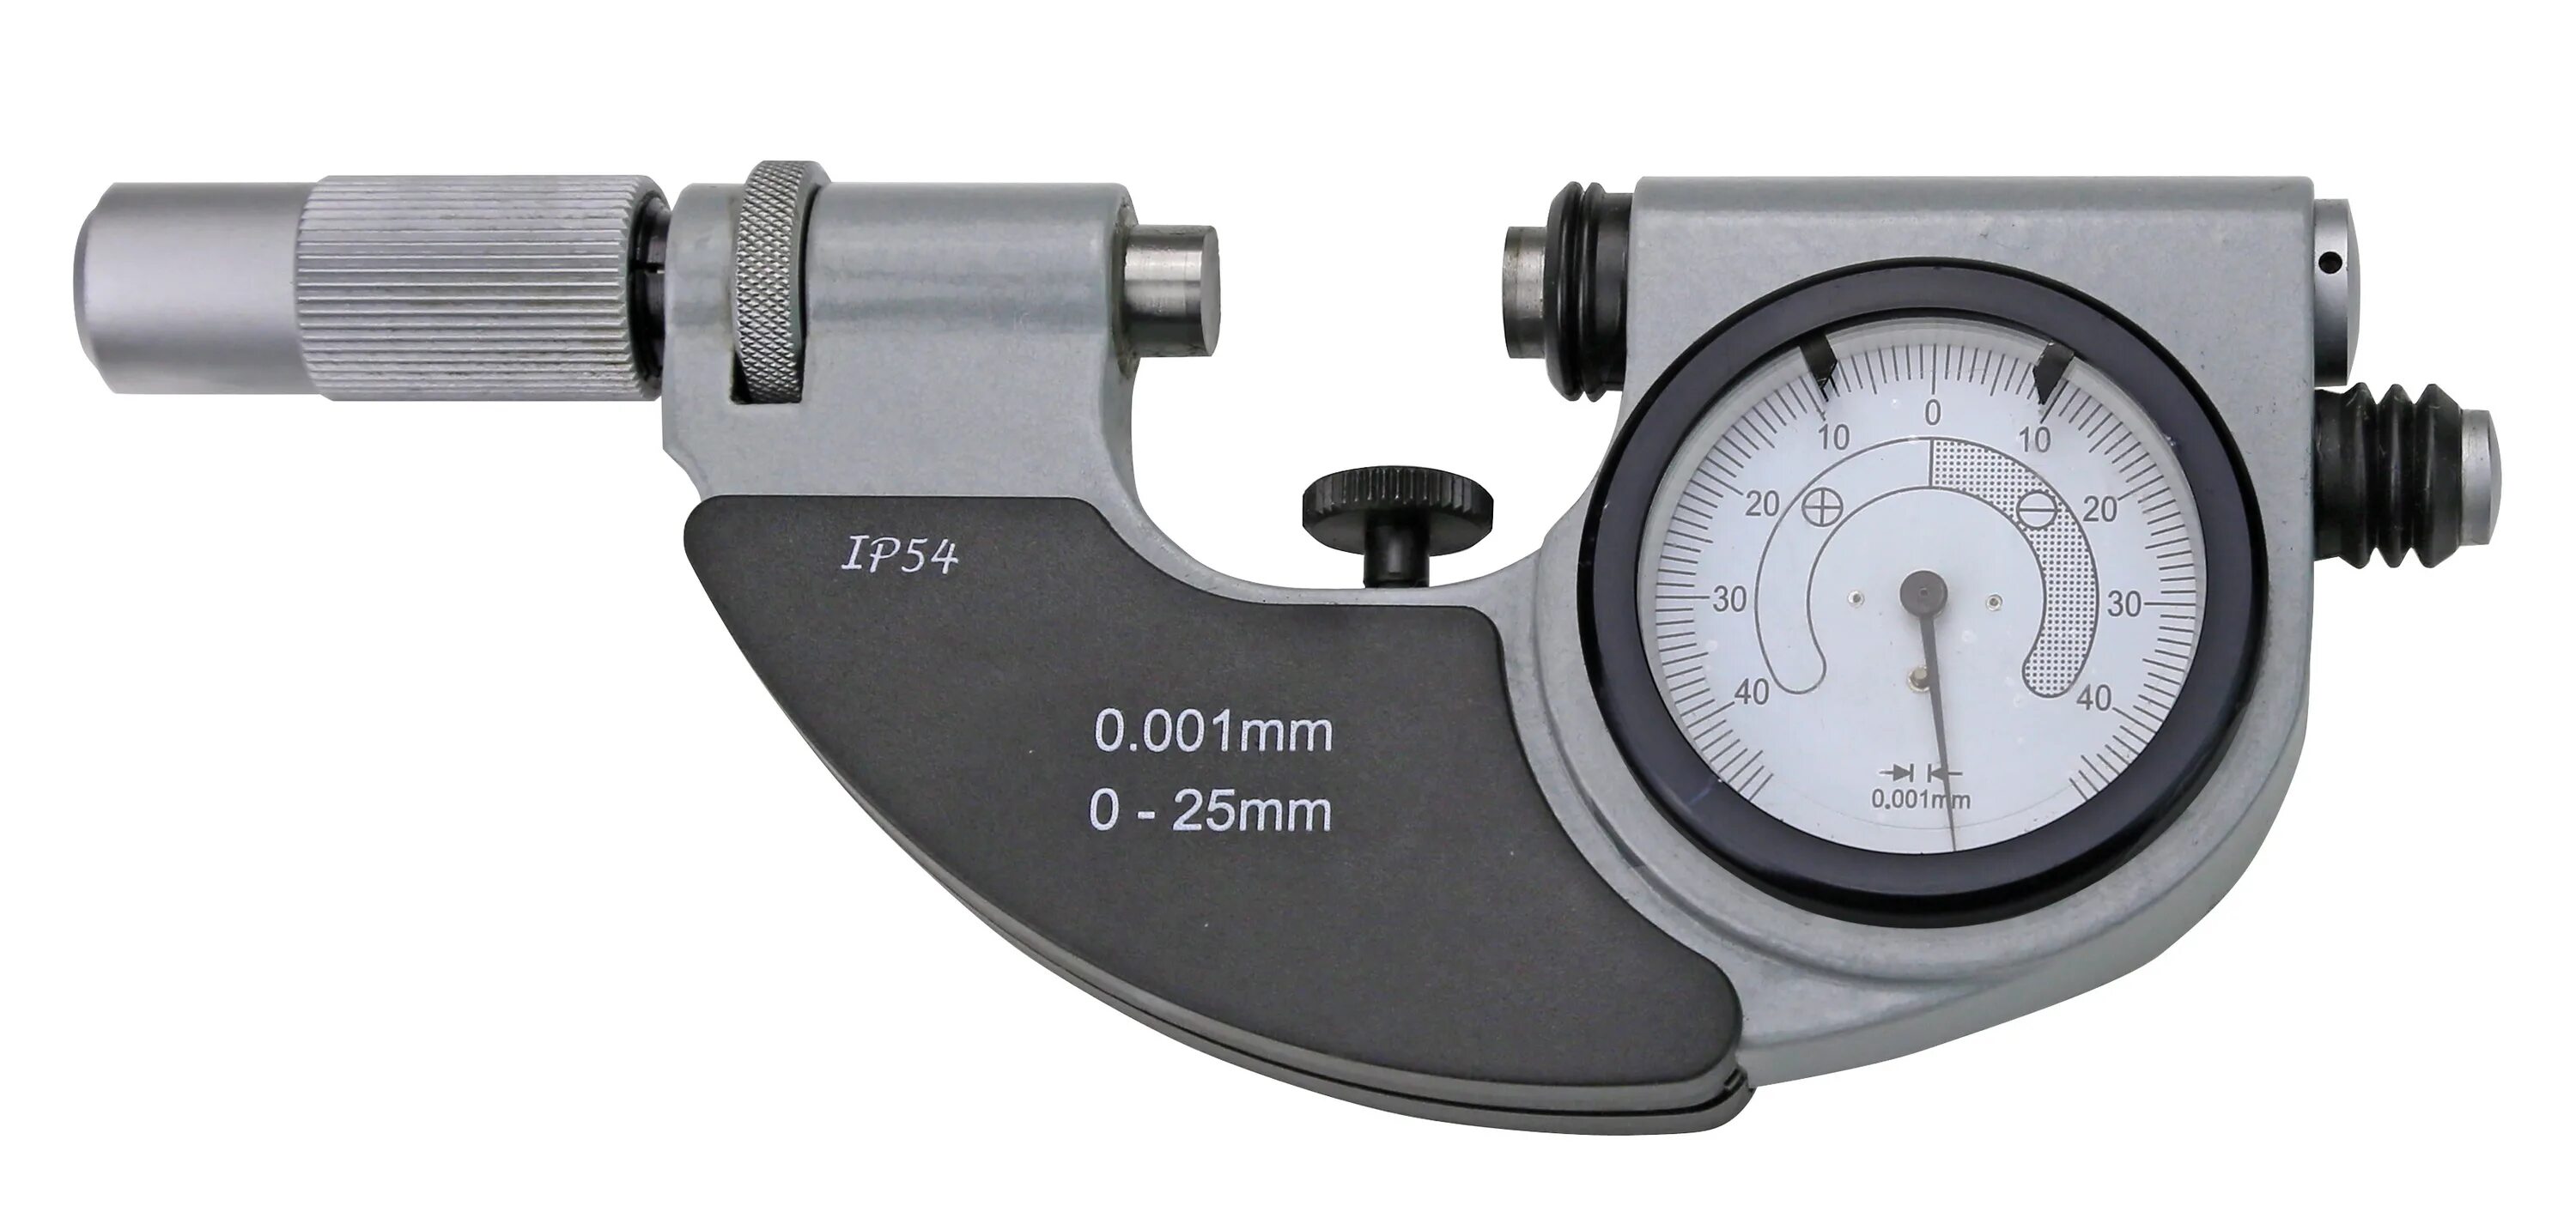 Micrometr HOLEX indicating Snap 422510 0-25. Пассаметр 25-50. Электронный микрометр 0-25mm. Пассаметр 0-25.